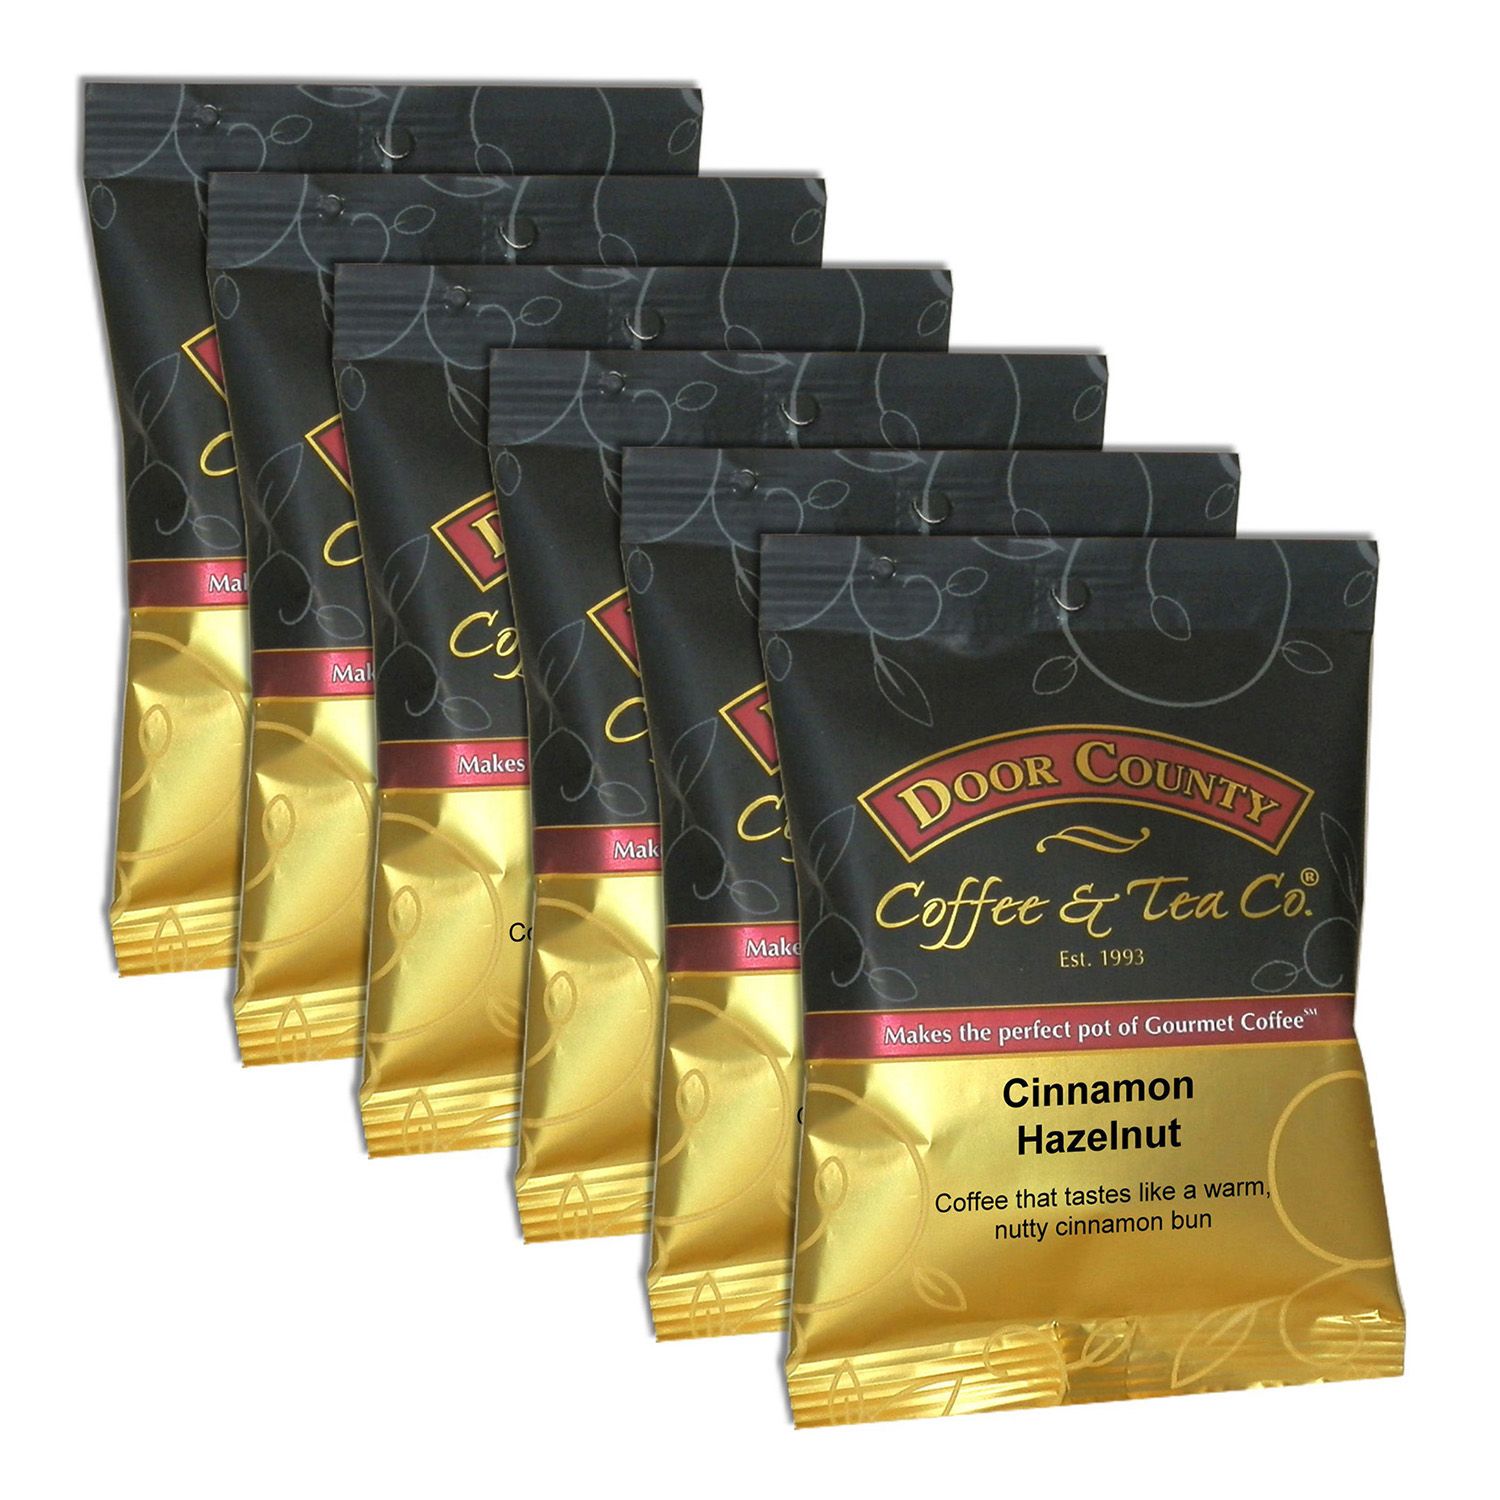 Image for Door County Coffee & Tea Co. Cinnamon Hazelnut Ground Coffee 6-pk. at Kohl's.